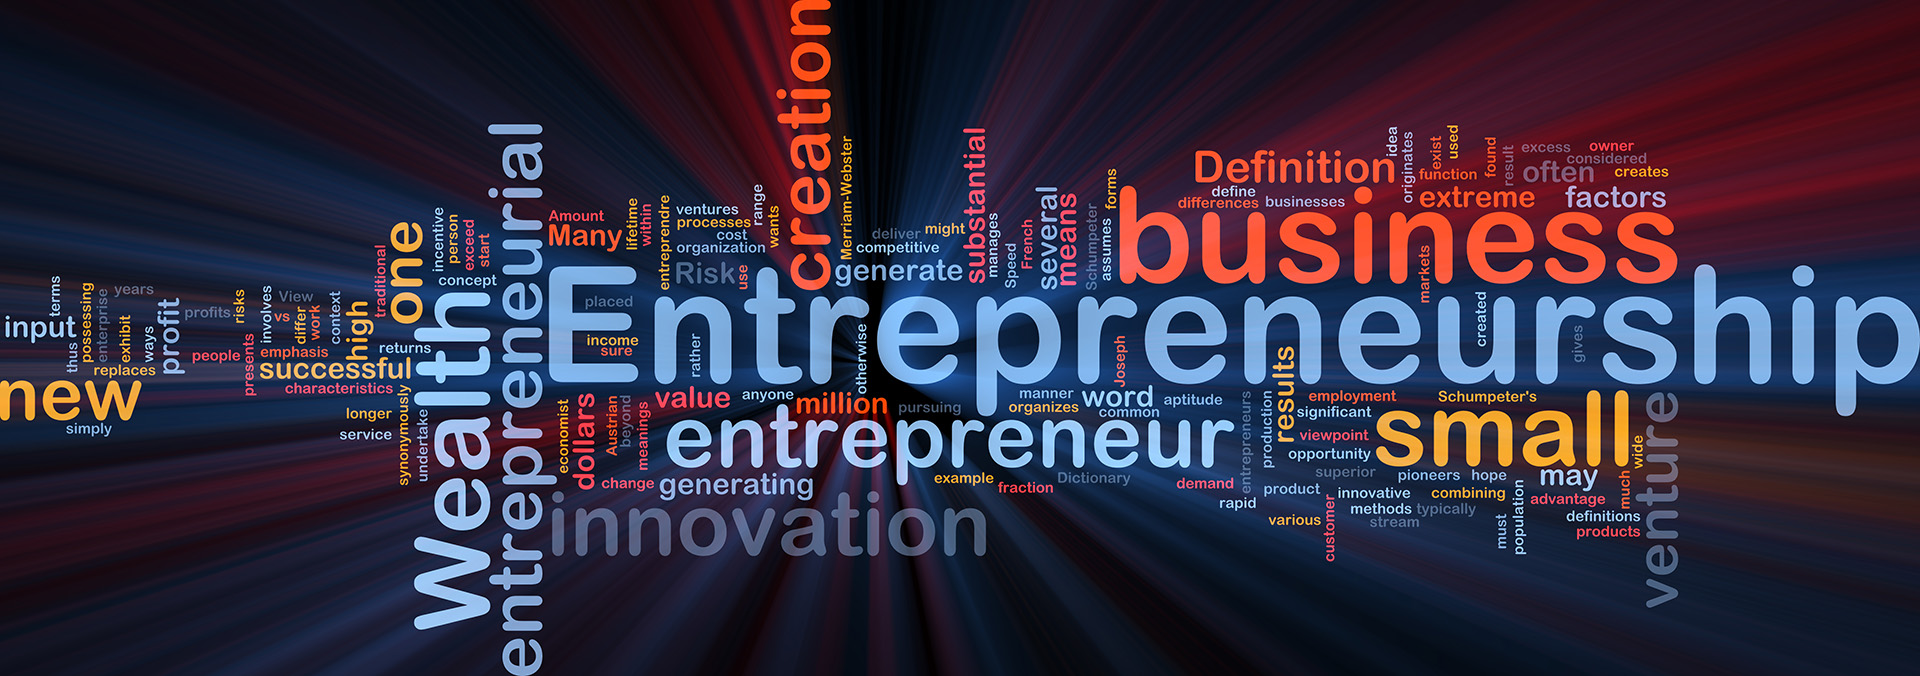 entrepreneurship word cloud image